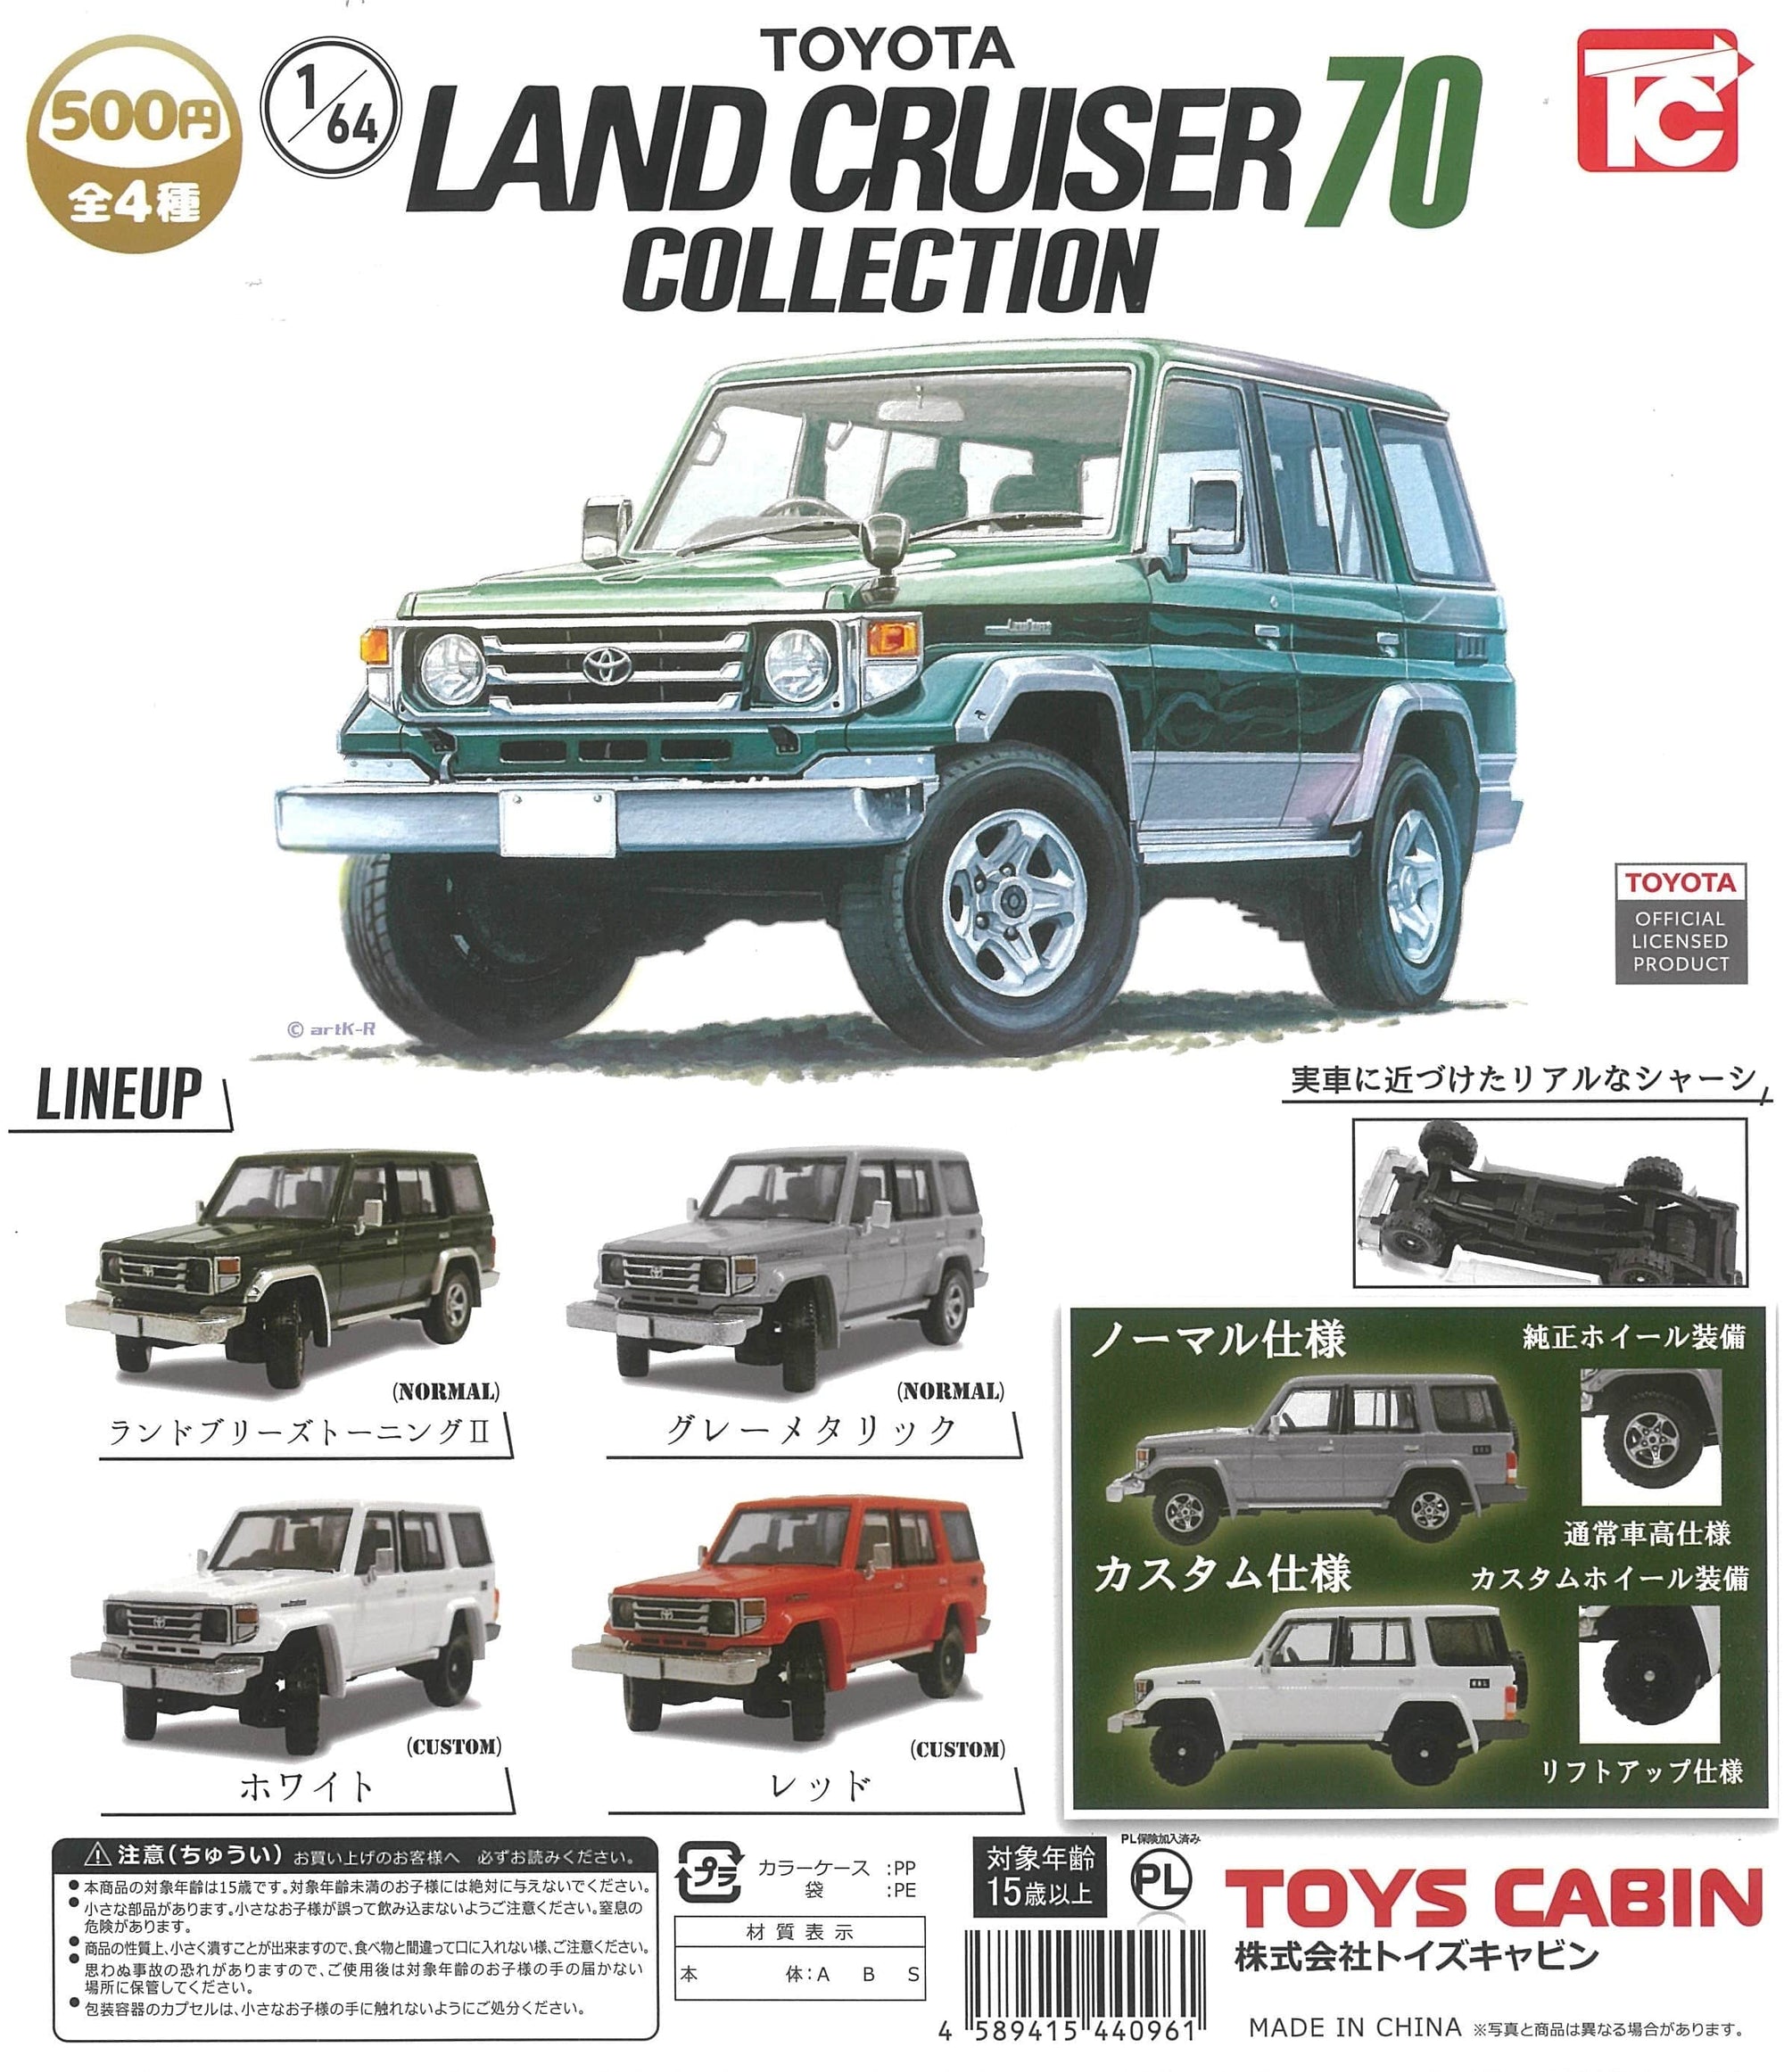 Toys Cabin CP1782 1/64 Toyota Land Cruiser 70 Collection